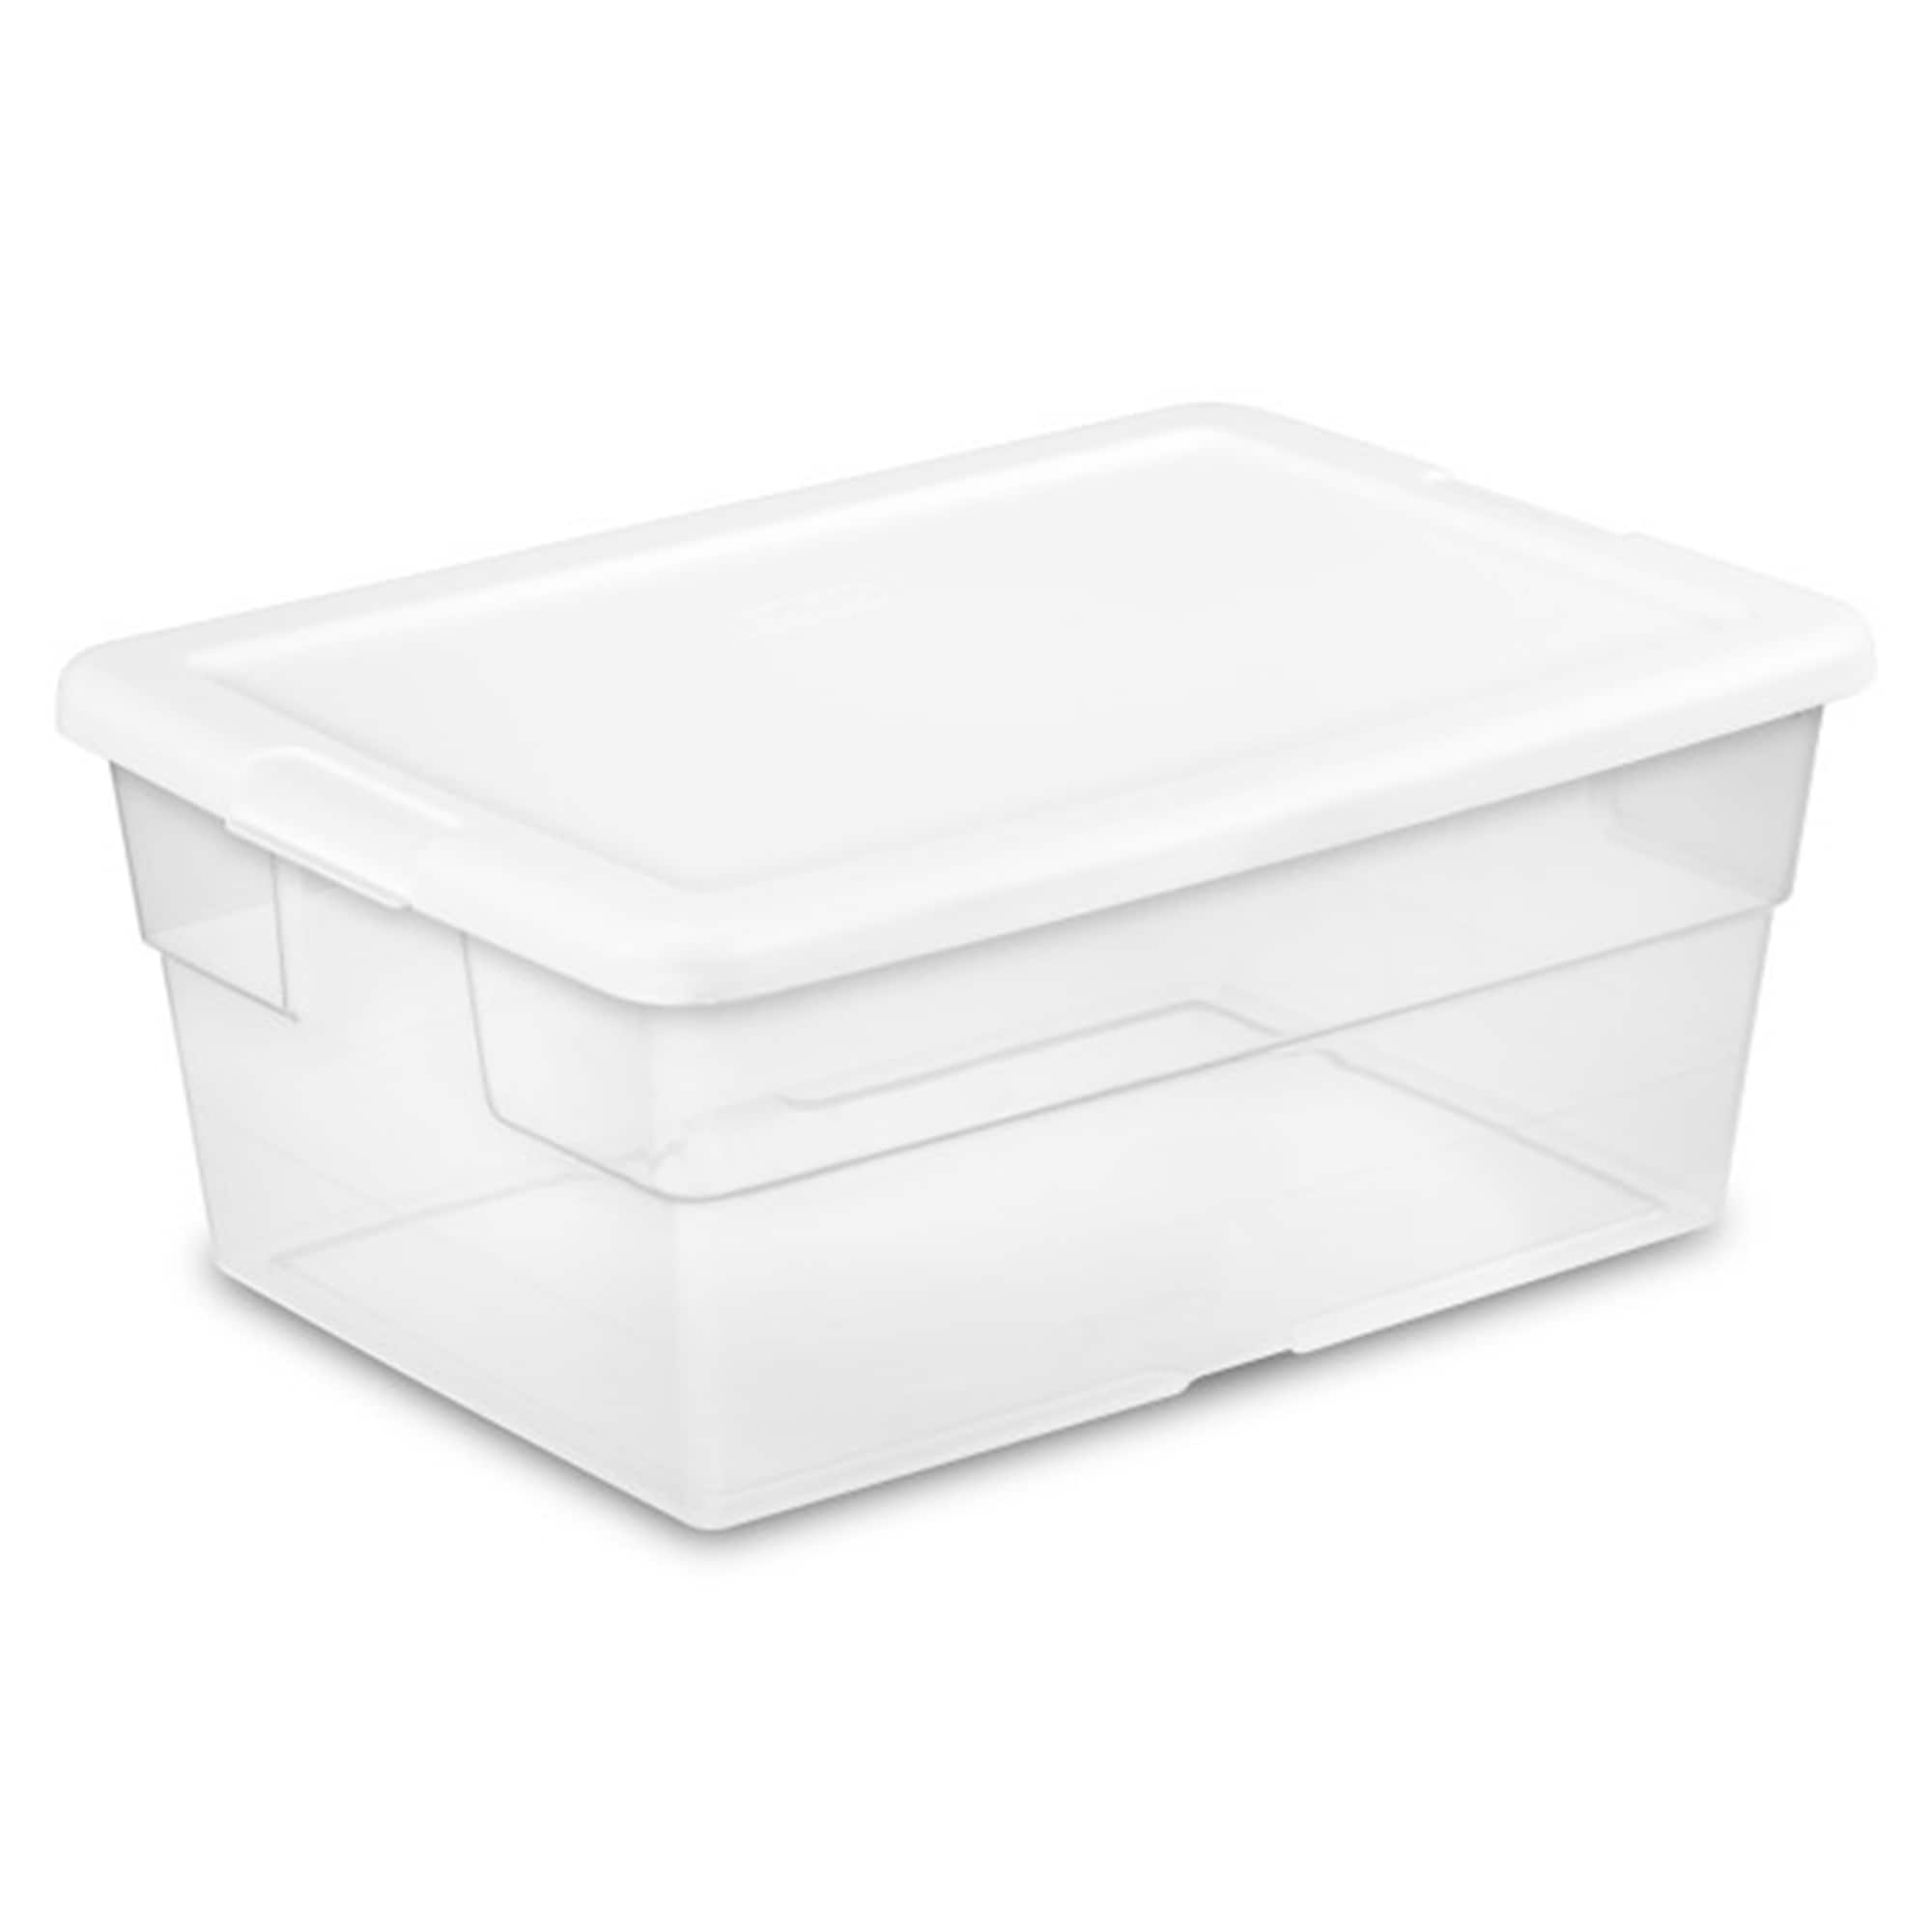 Sterilite 16 Qt. Plastic Storage Box Containers in Clear (12-Pack